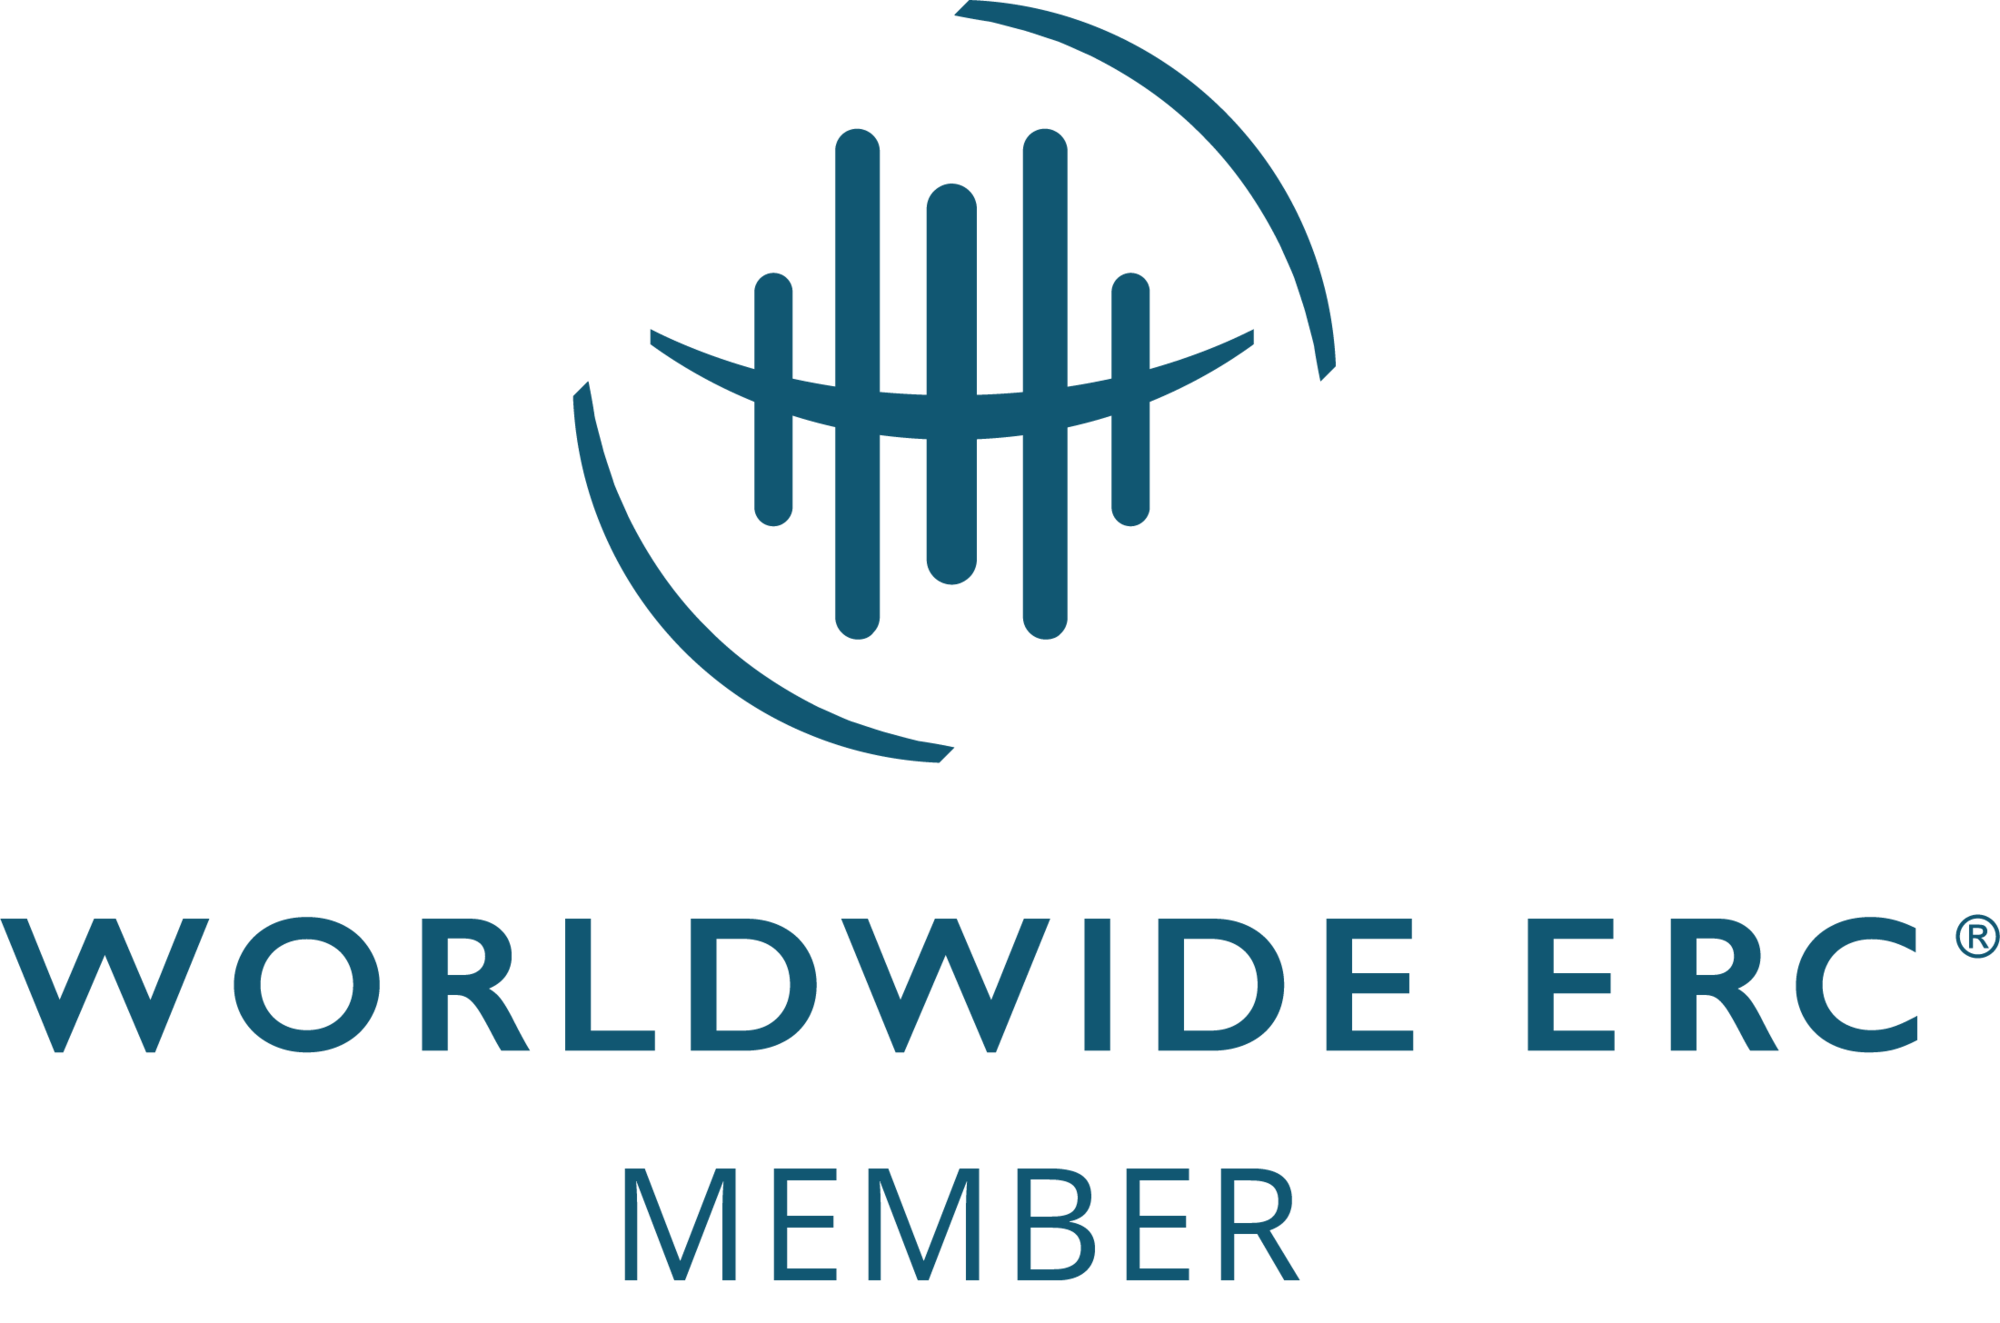 Worldwide ERC